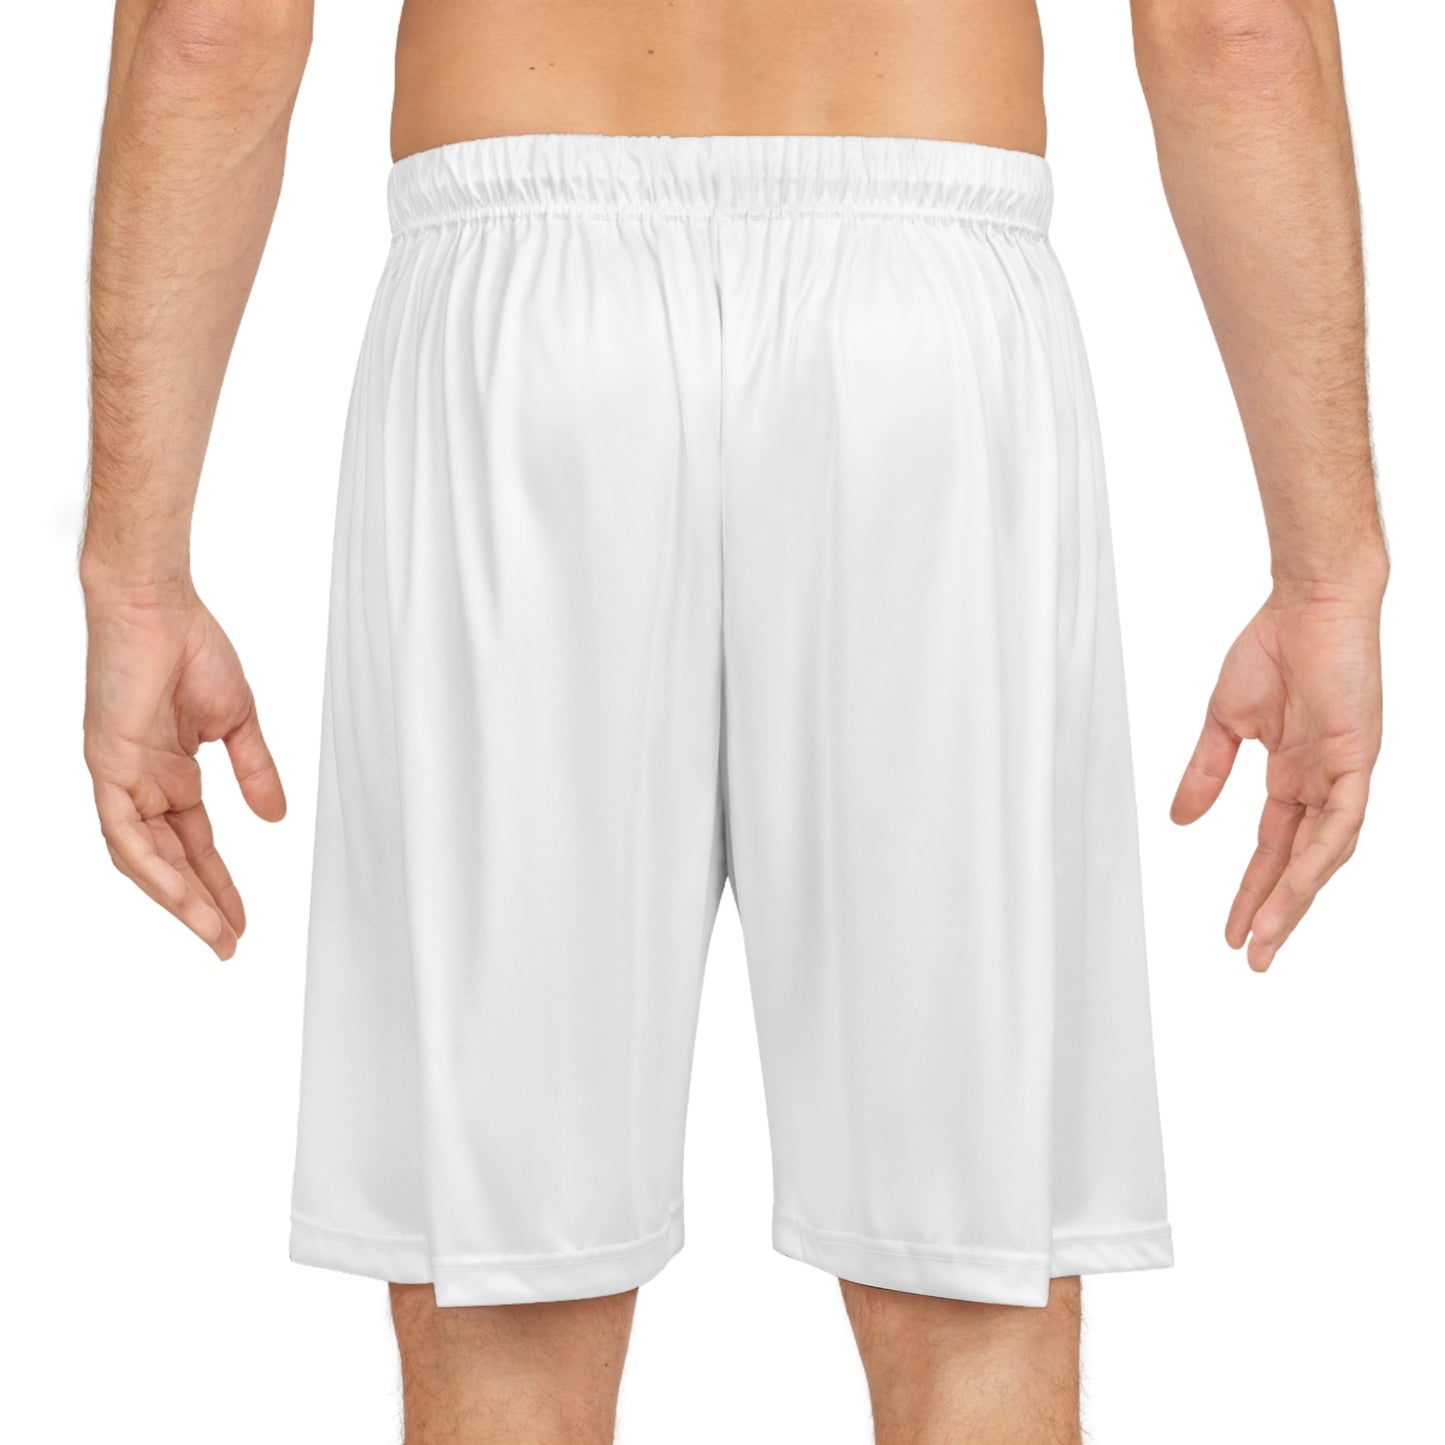 Actavis Basketball Shorts